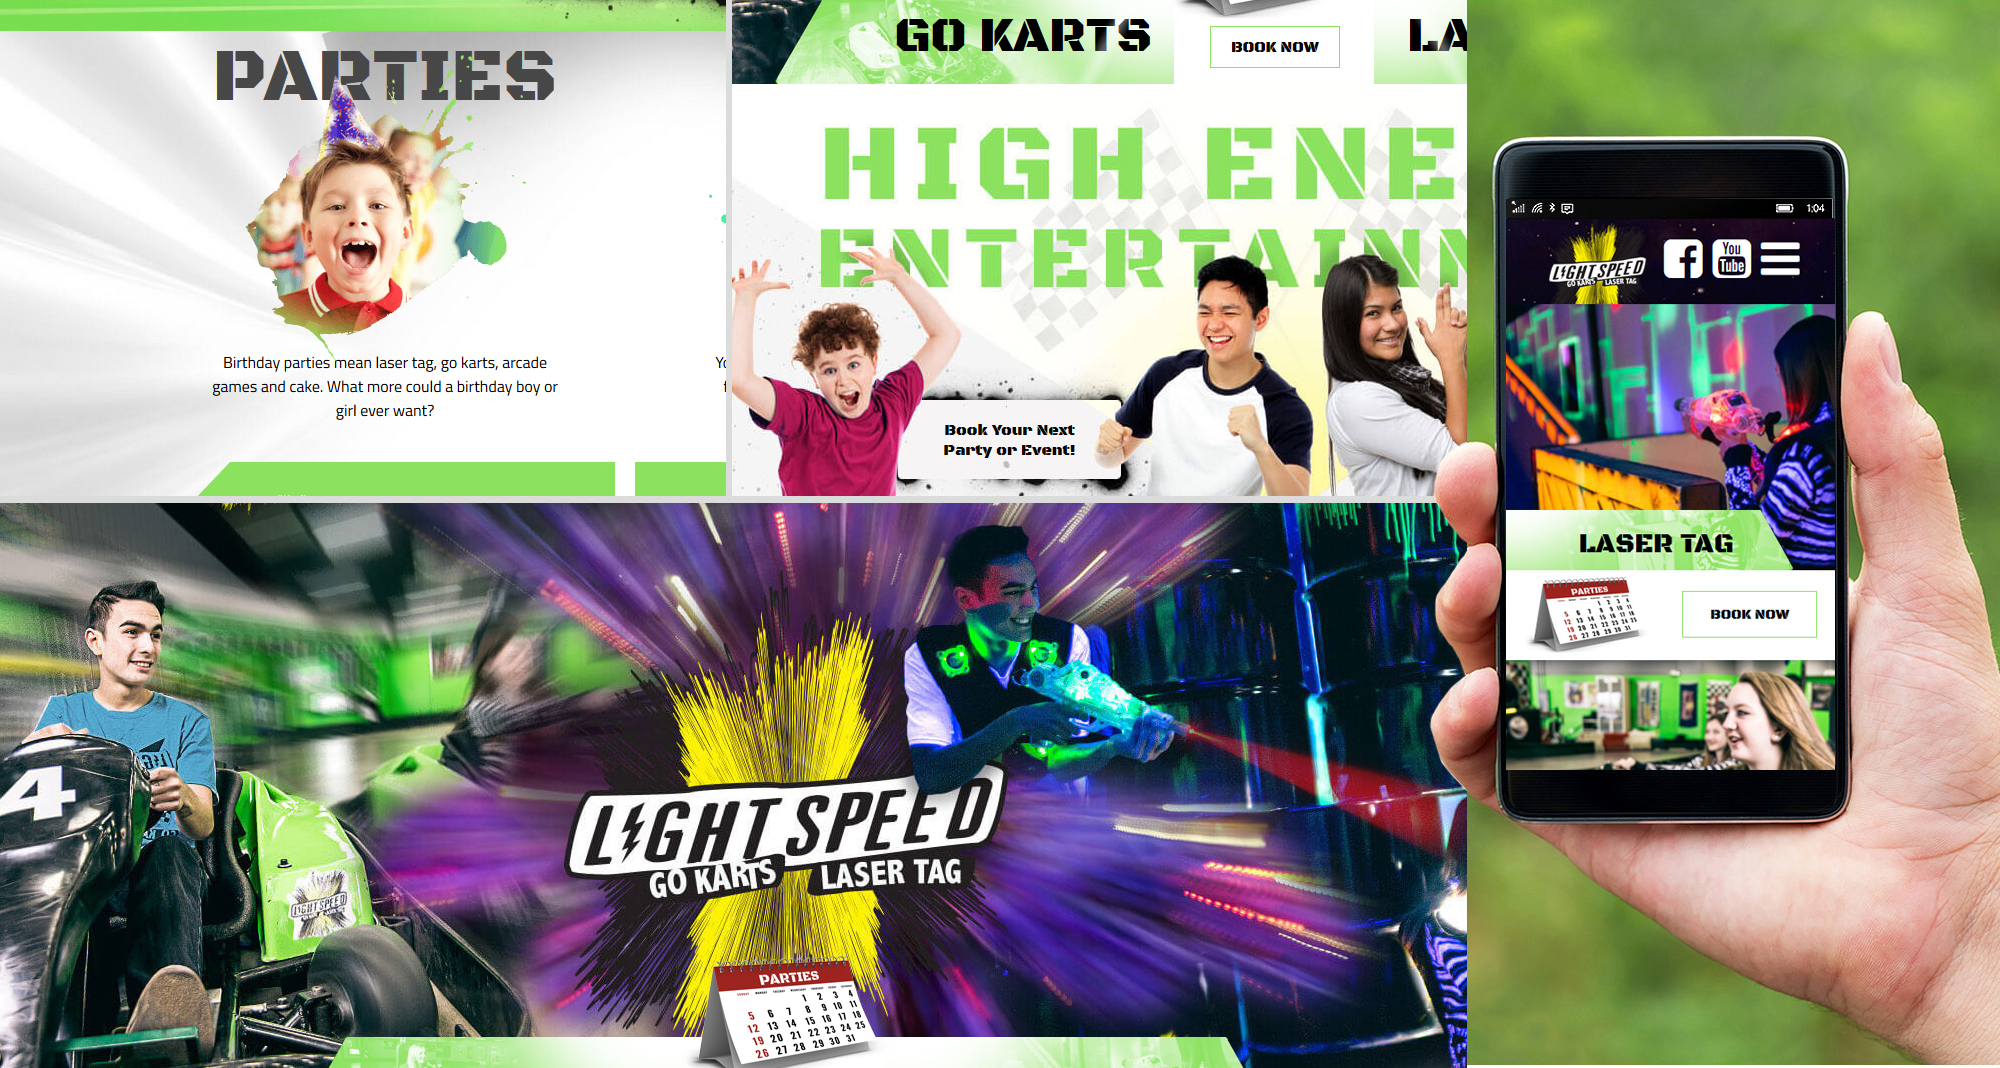 Milwaukee web marketing for Light Speed Go Karts/Laser Tag